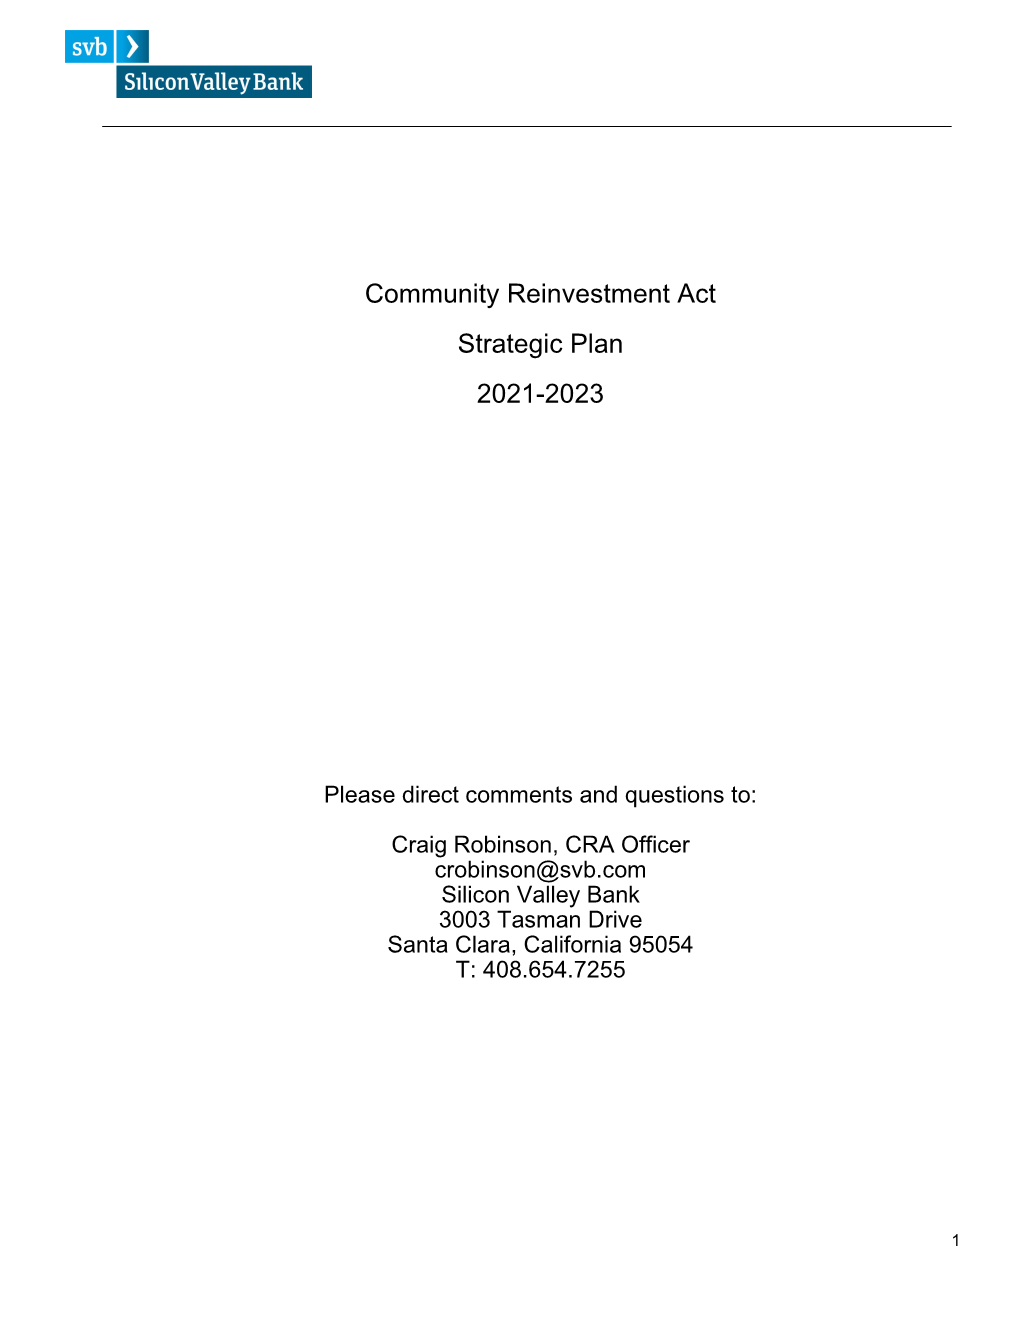 Community Reinvestment Act Strategic Plan 2021-2023